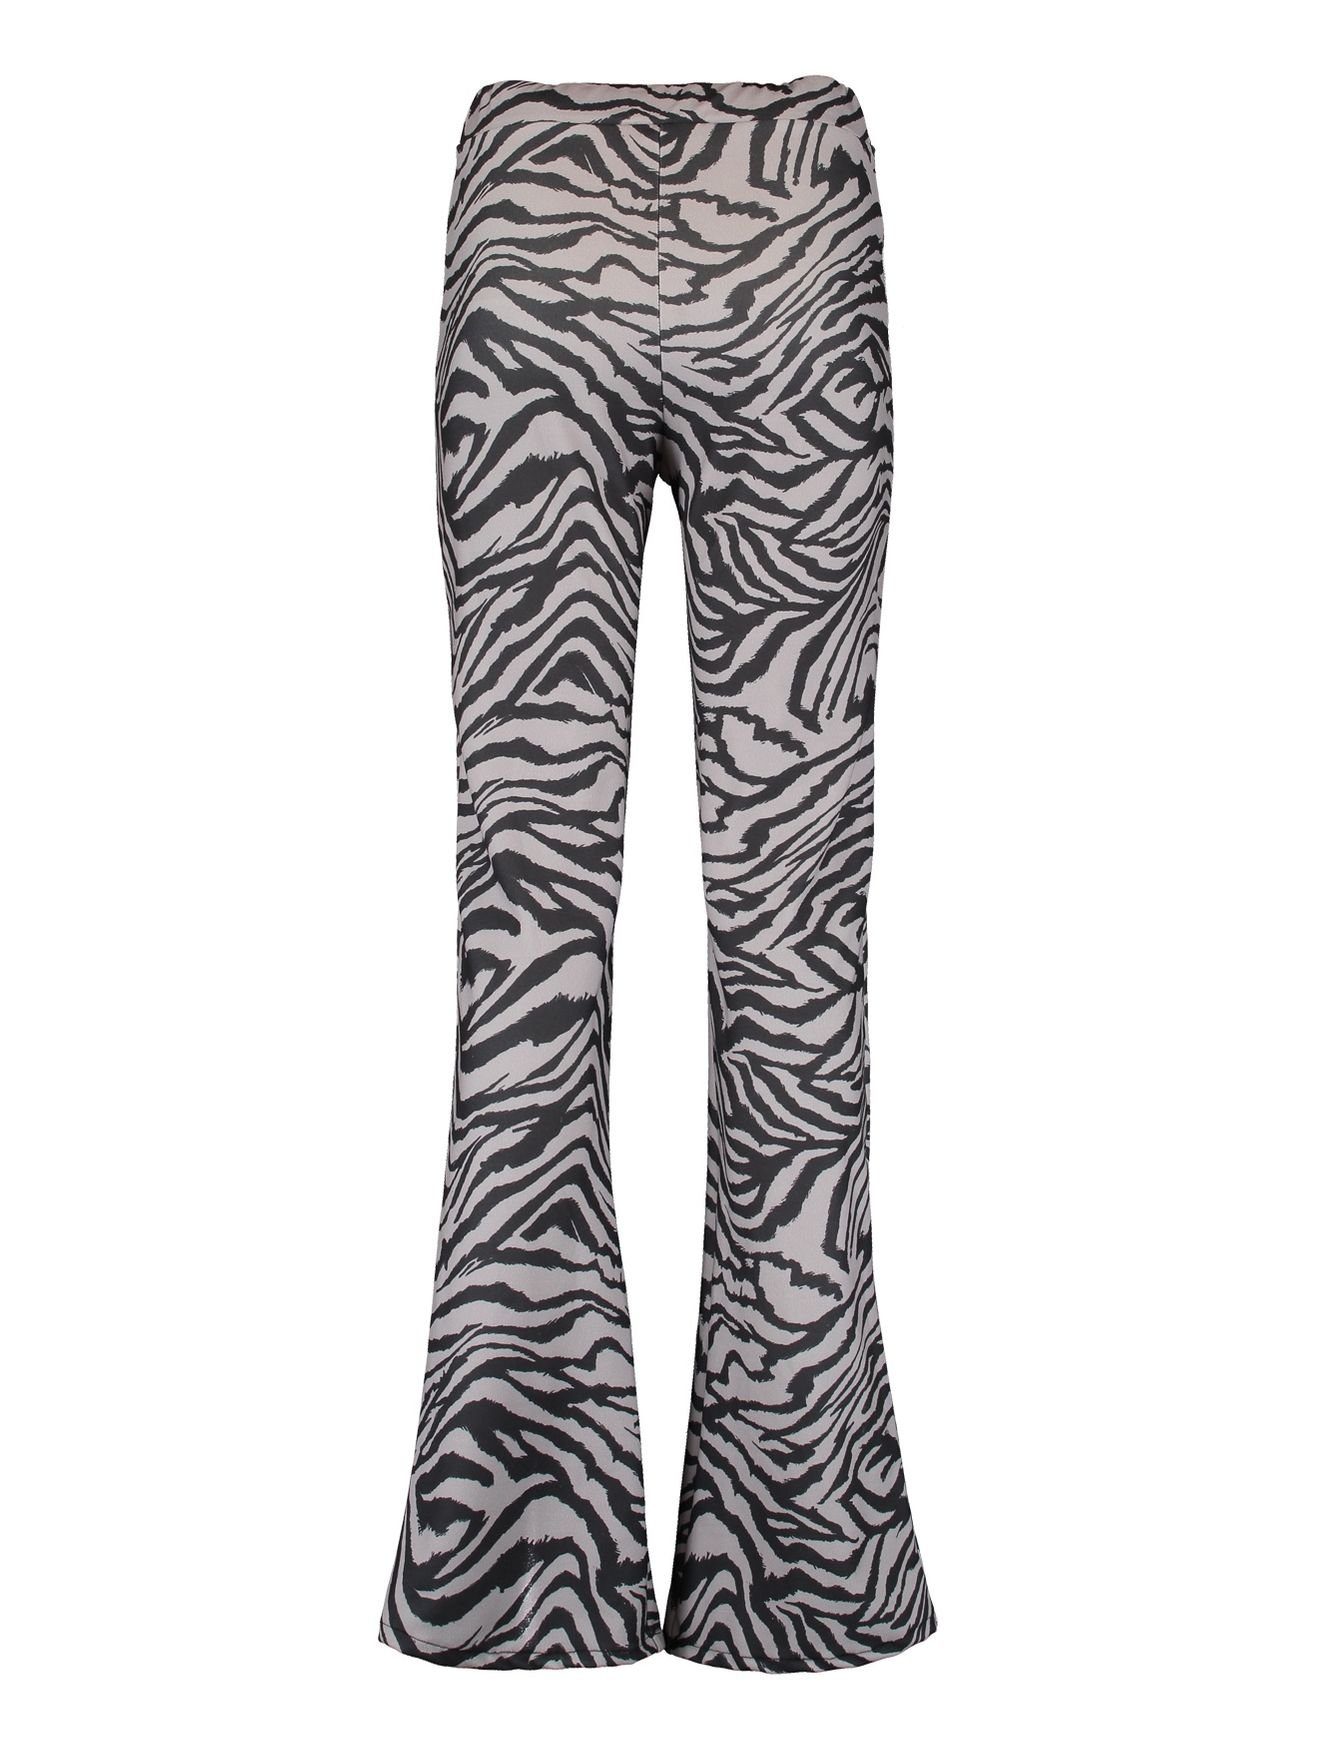 HaILY'S Stoffhose Flared Bootcut Leggings Stoff Hose Zebra Animal Print  Sinka 5073 in Grau